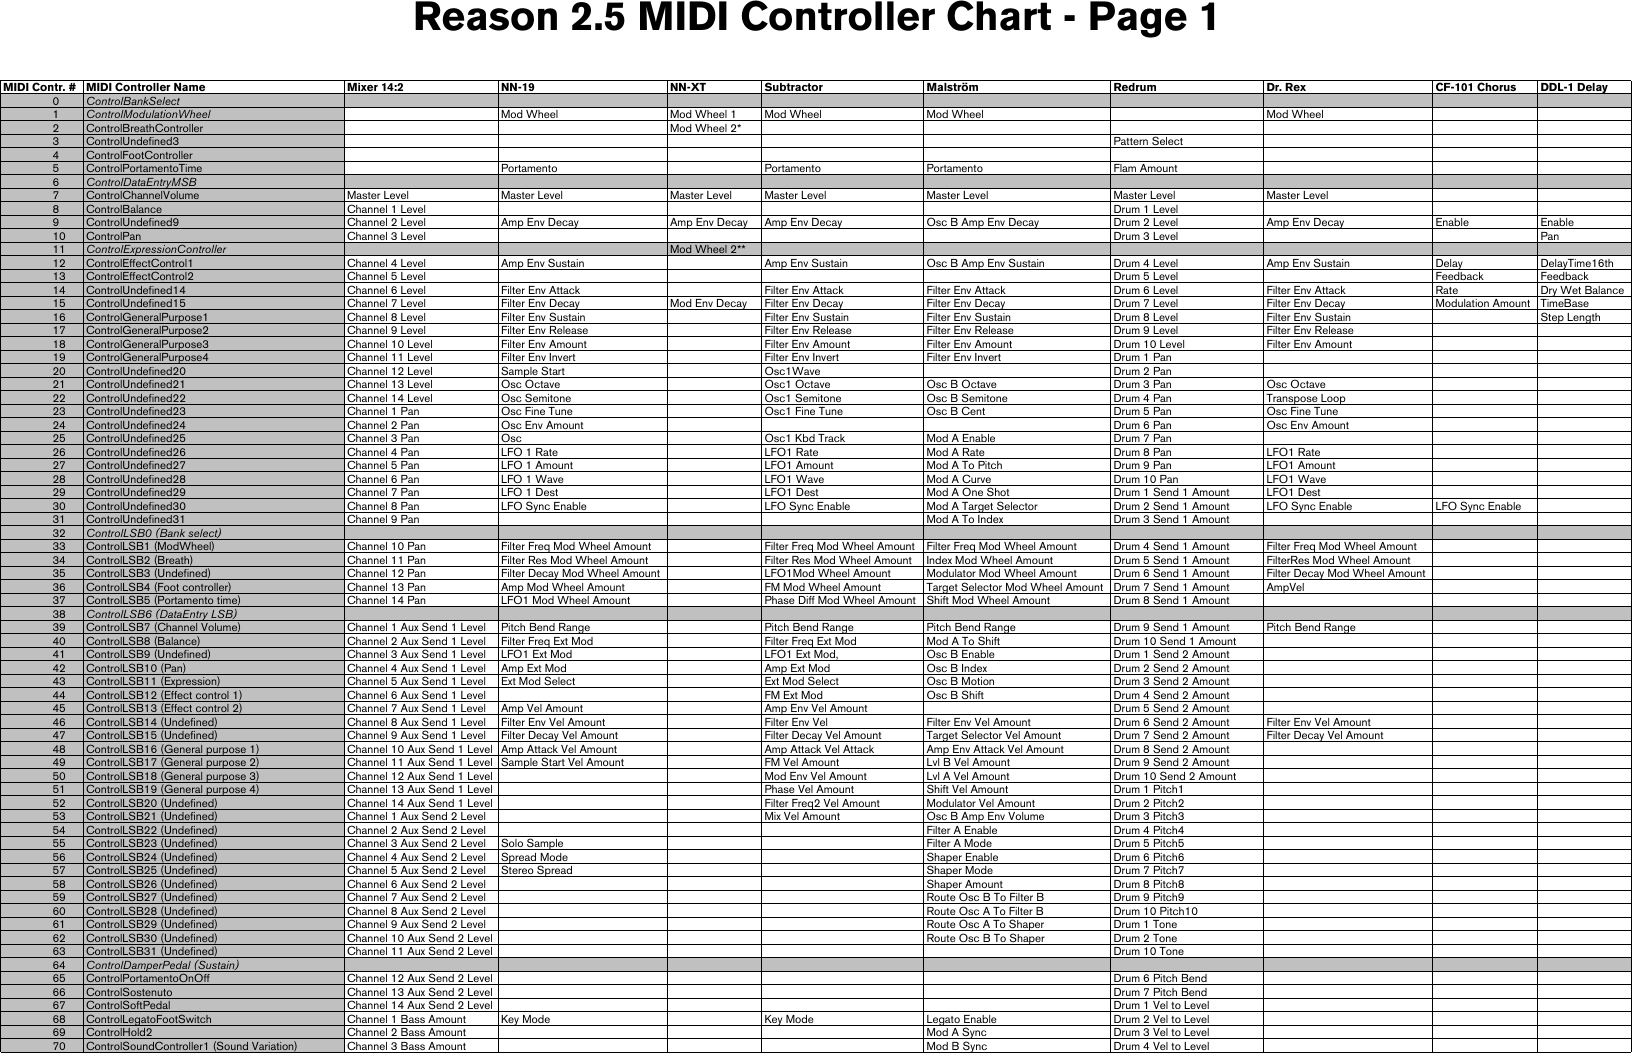 Reason 9 Midi Implementation Chart